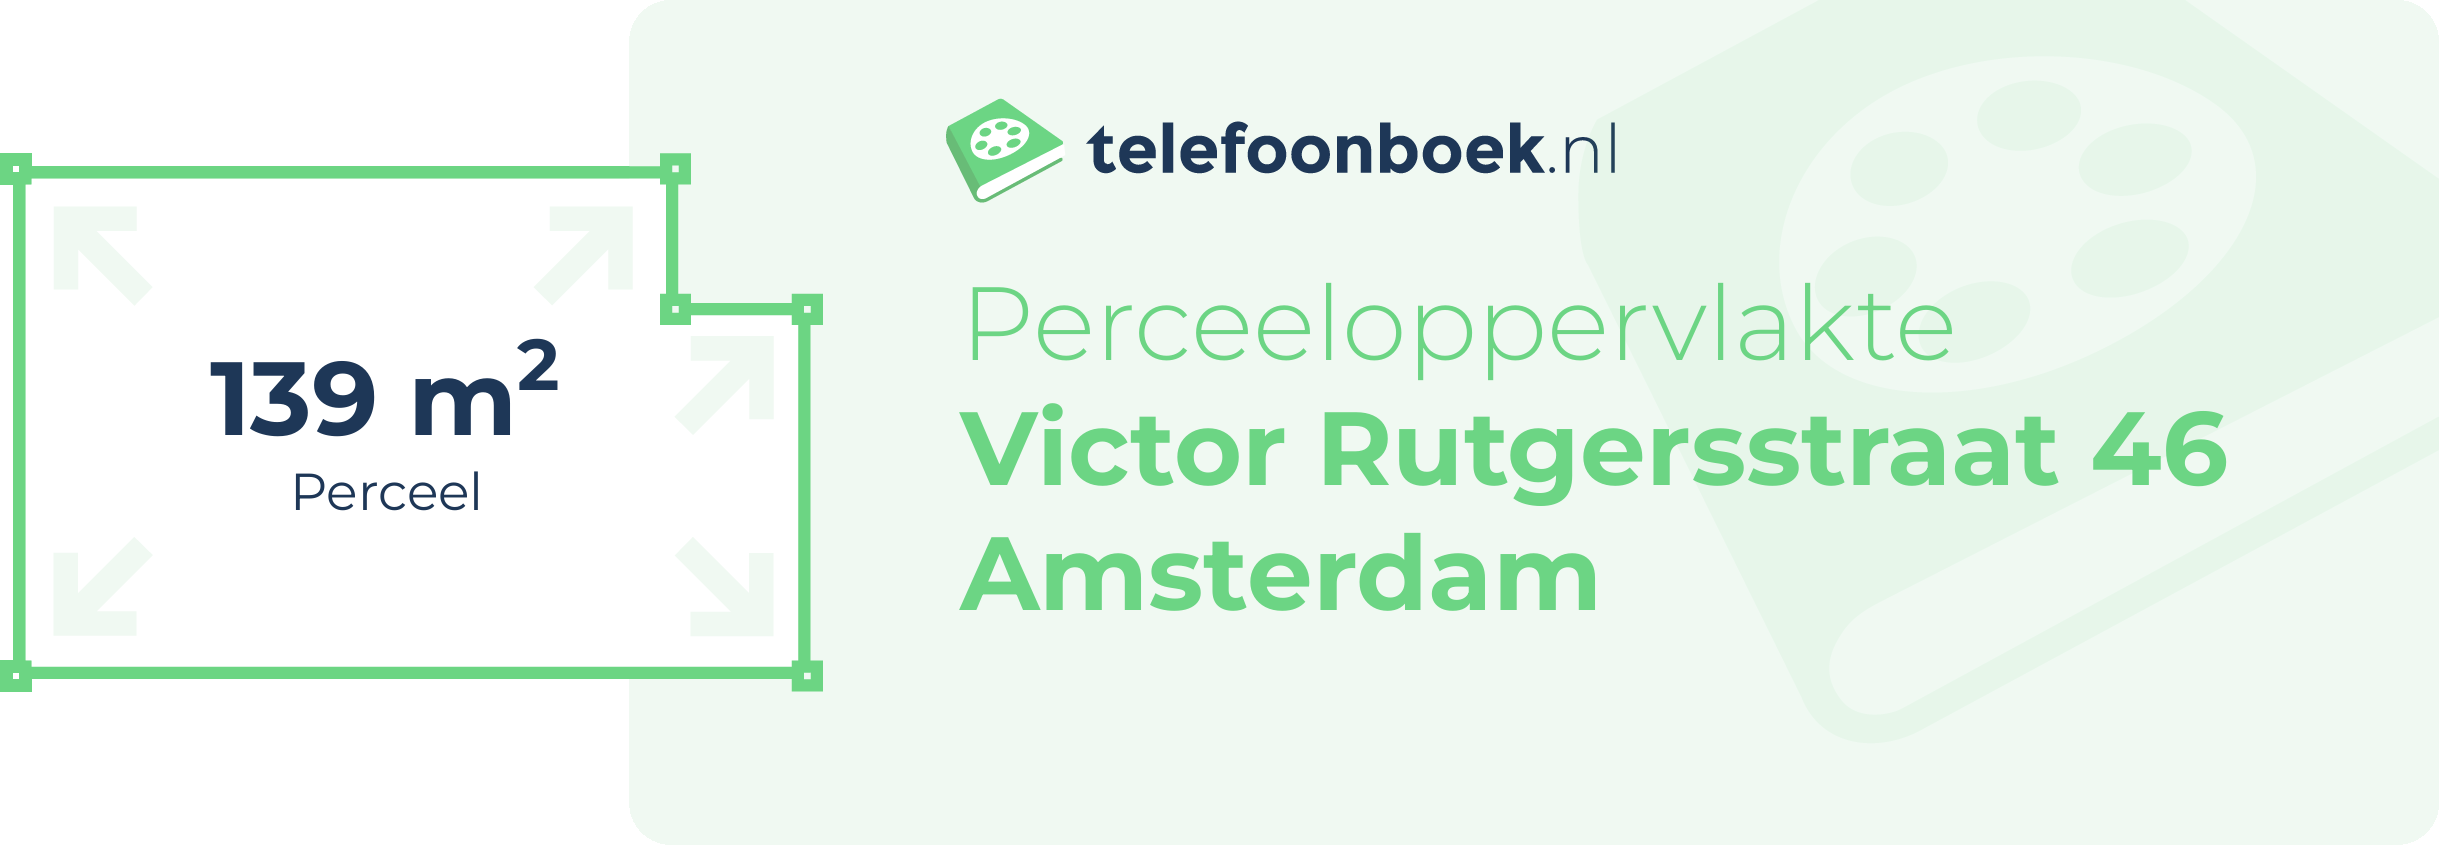 Perceeloppervlakte Victor Rutgersstraat 46 Amsterdam